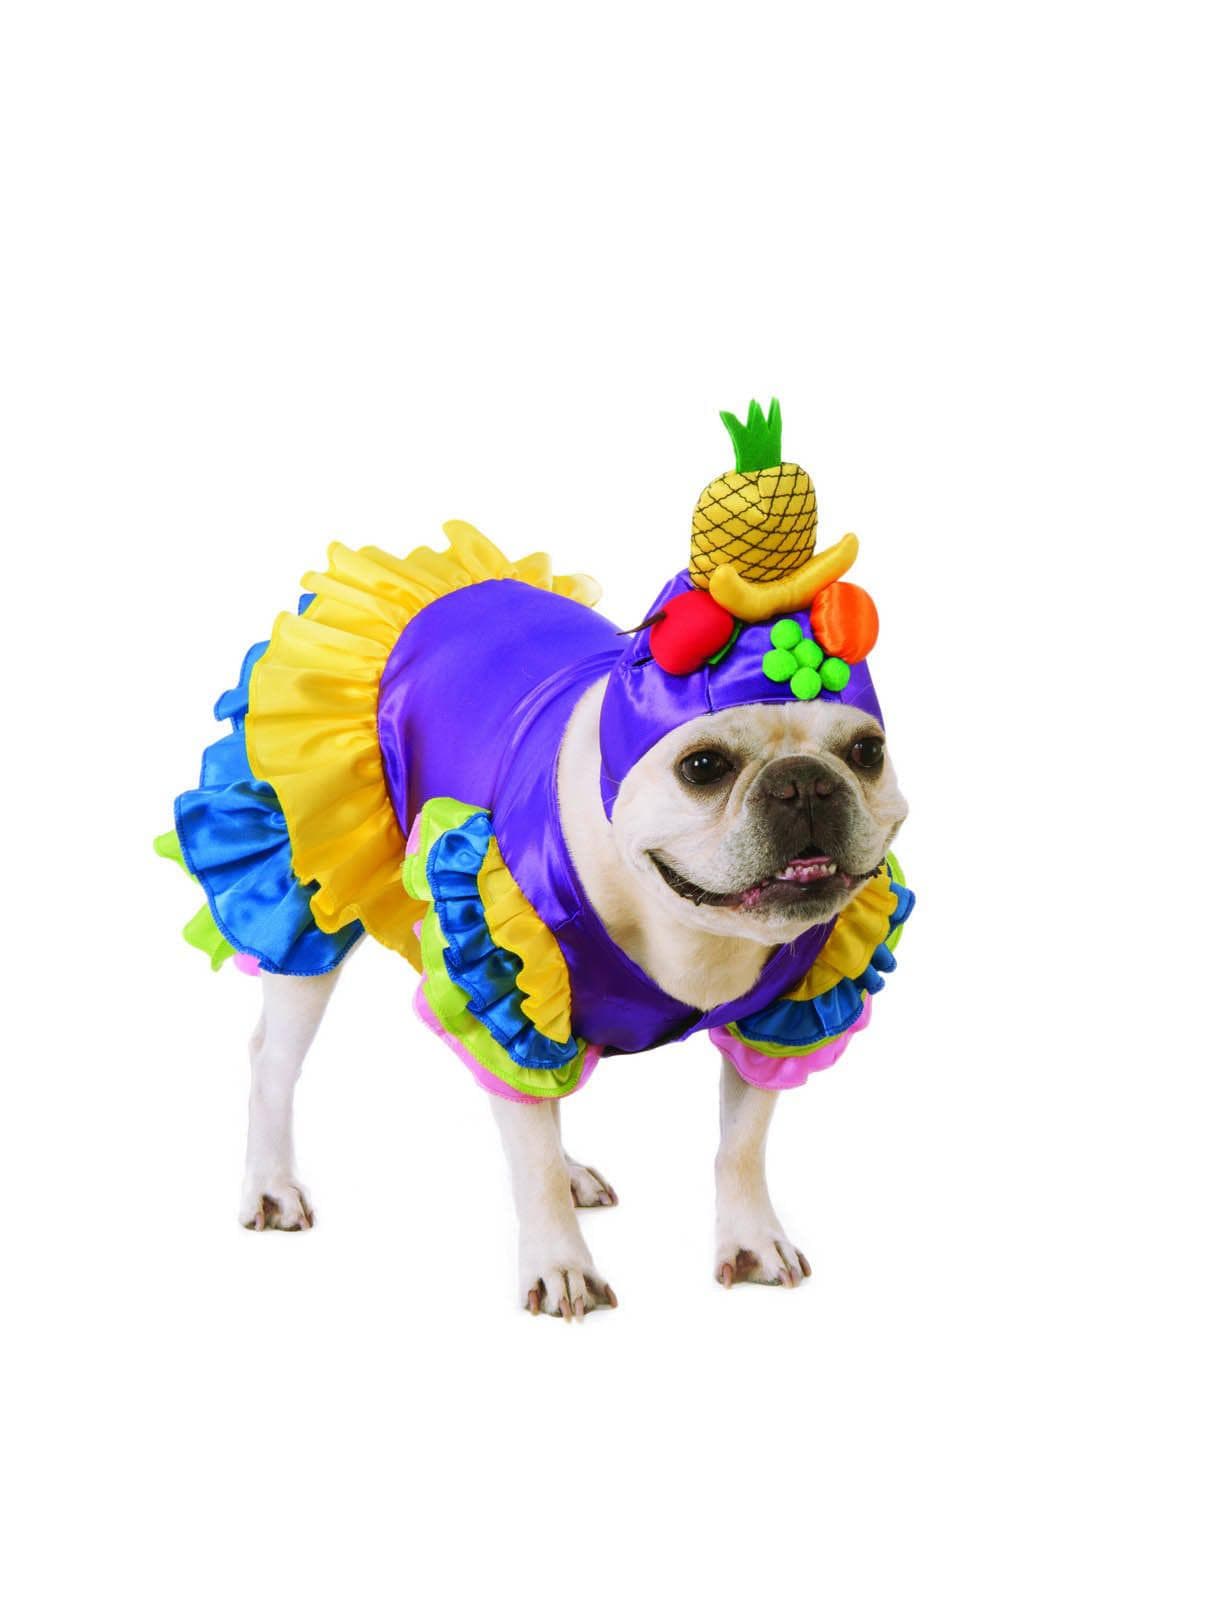 Brazilian Samba Inspired Pet Costume - costumes.com